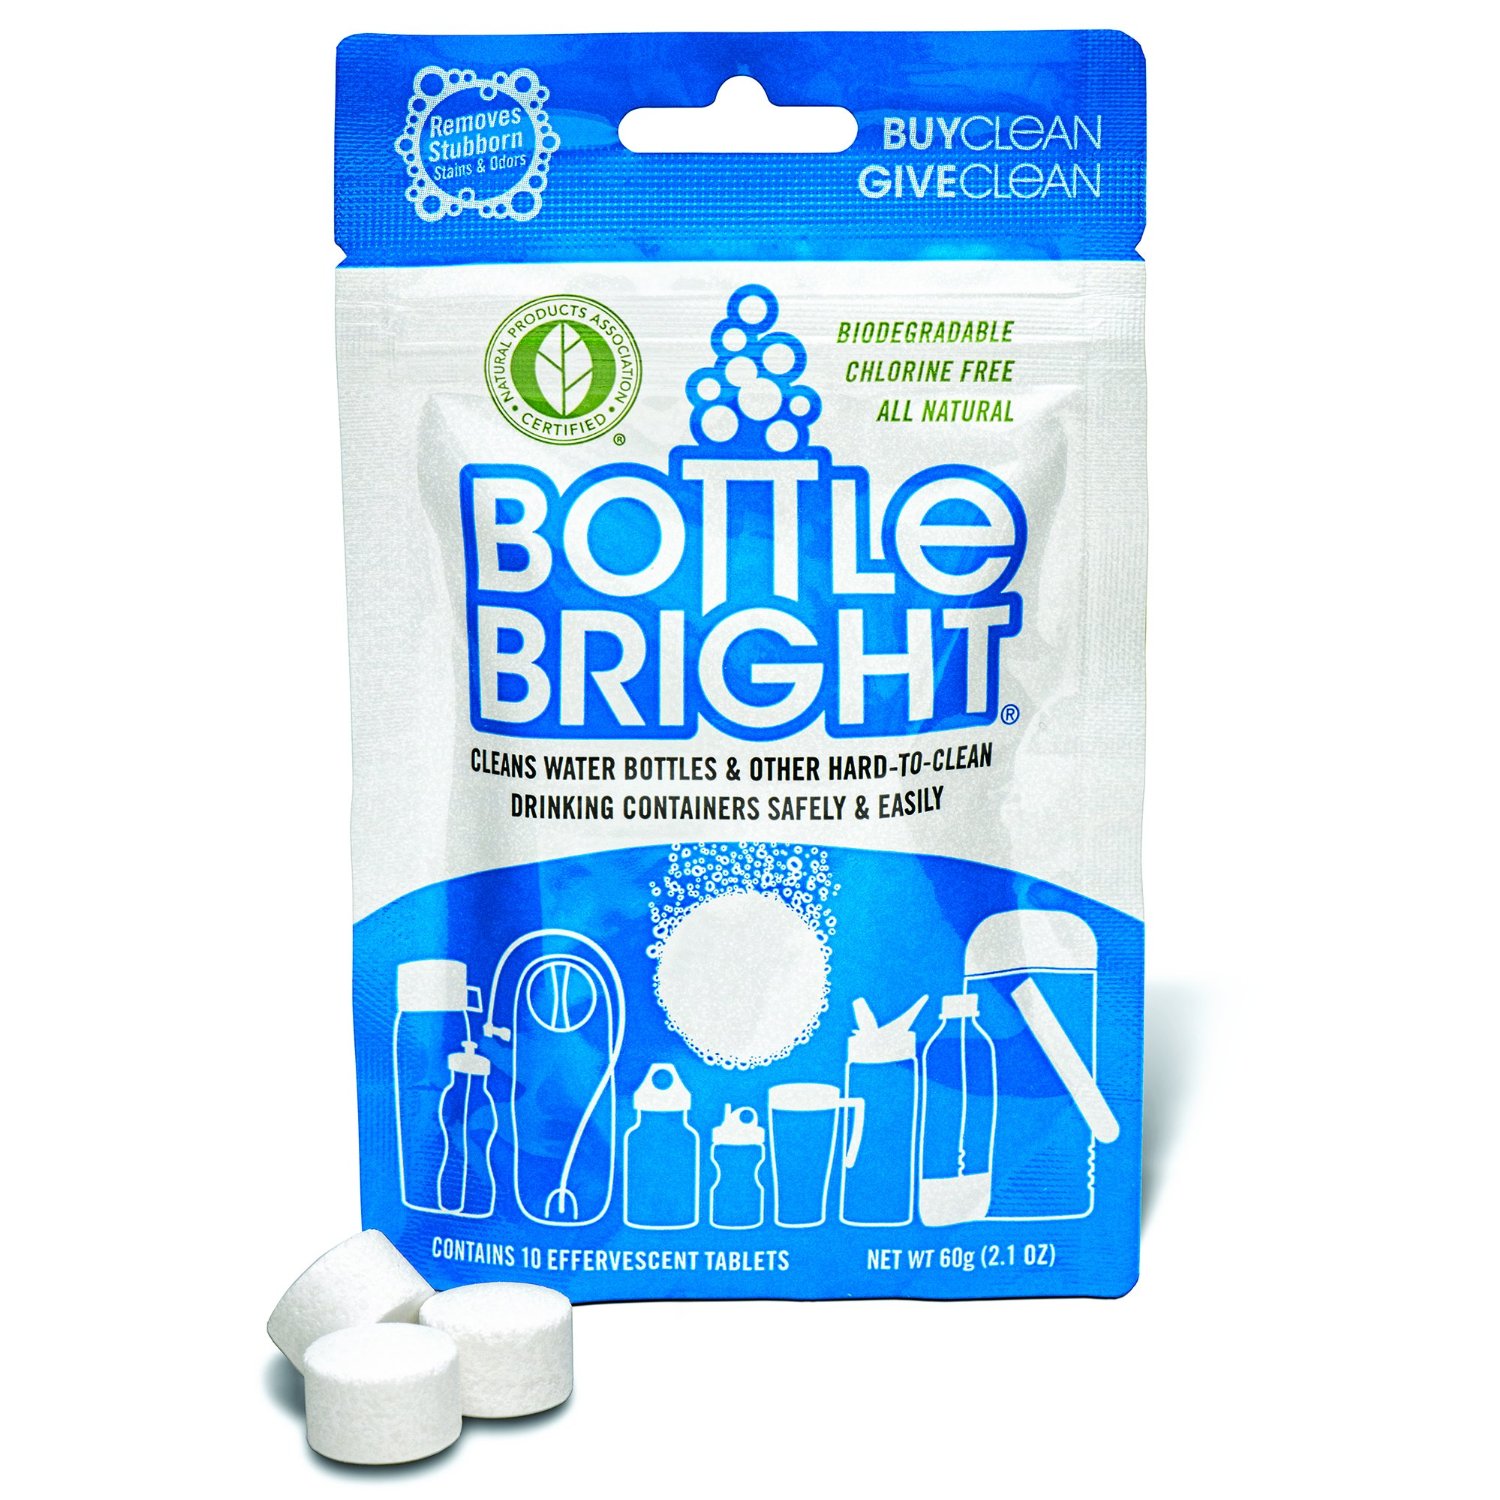 https://allsharktankproducts.com/wp-content/uploads/2015/02/shark-tank-products-bottle-bright.jpg